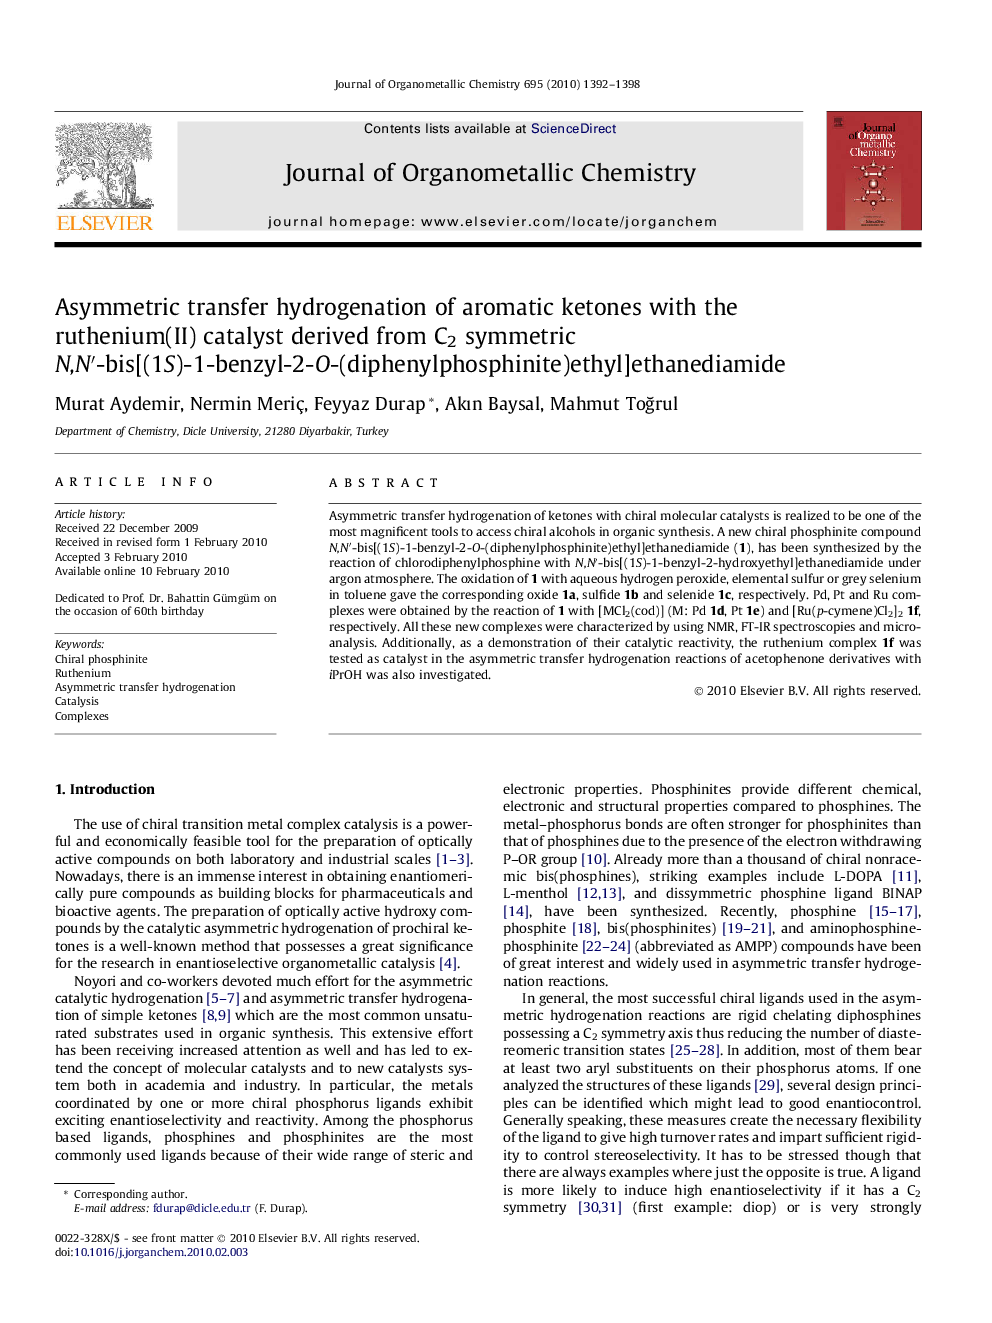 Asymmetric transfer hydrogenation of aromatic ketones with the ruthenium(II) catalyst derived from C2 symmetric N,N′-bis[(1S)-1-benzyl-2-O-(diphenylphosphinite)ethyl]ethanediamide